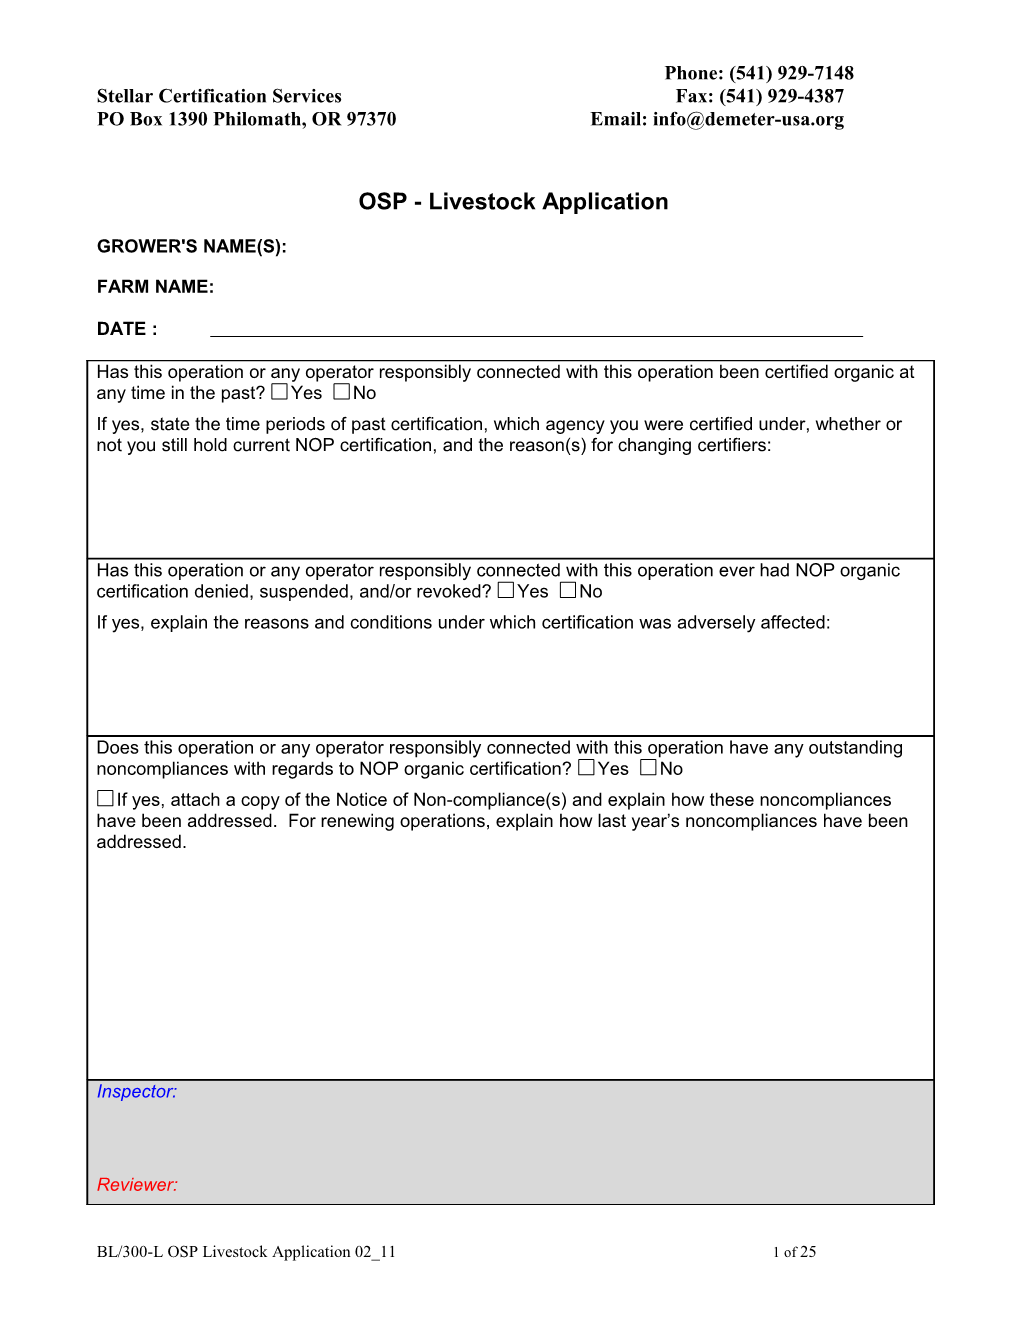 OSP - Livestock Application